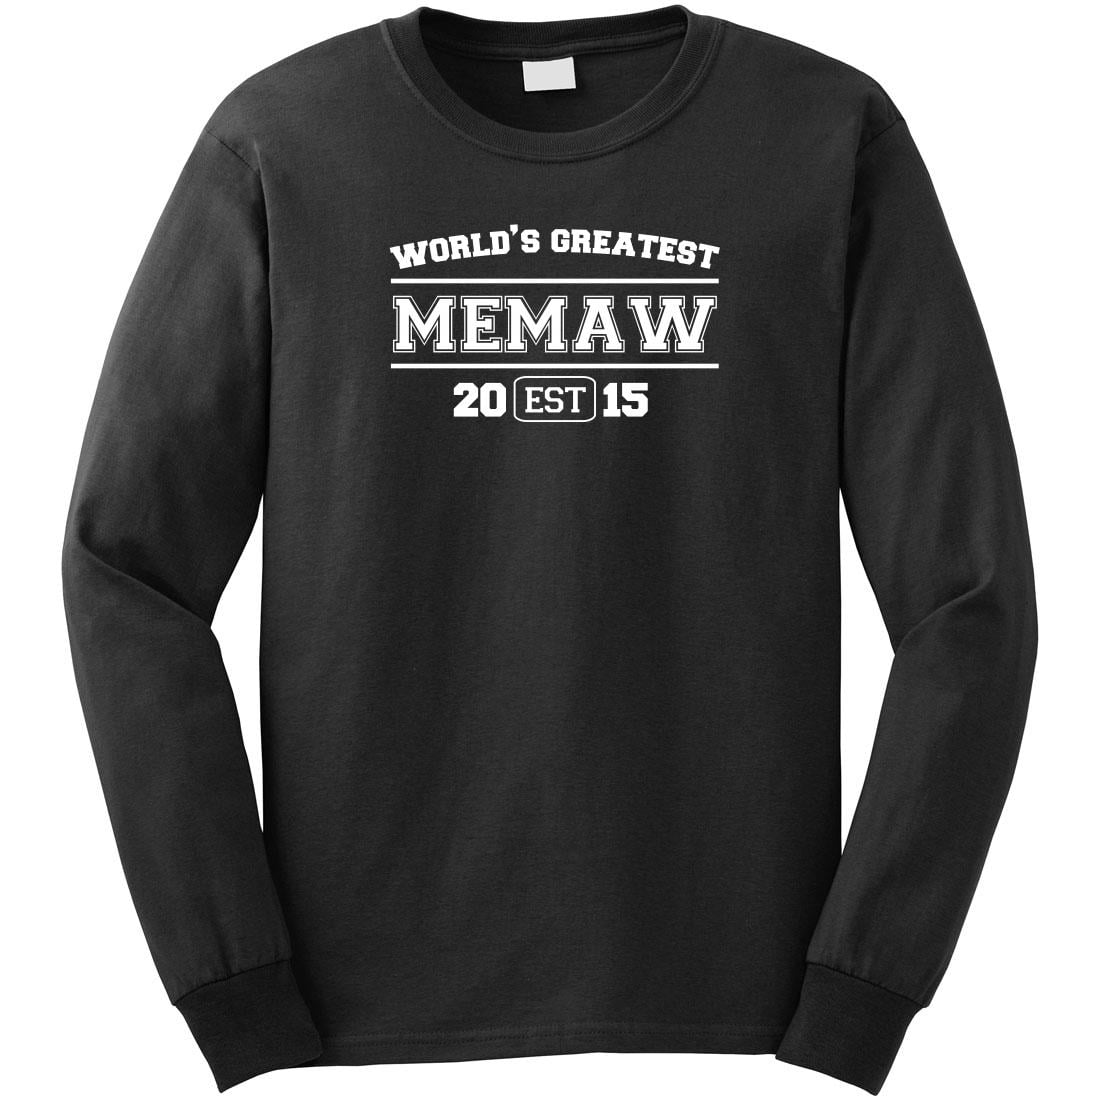 World's Greatest Memaw Men's Long Sleeve Shirt - ID: 716 - Walmart.com